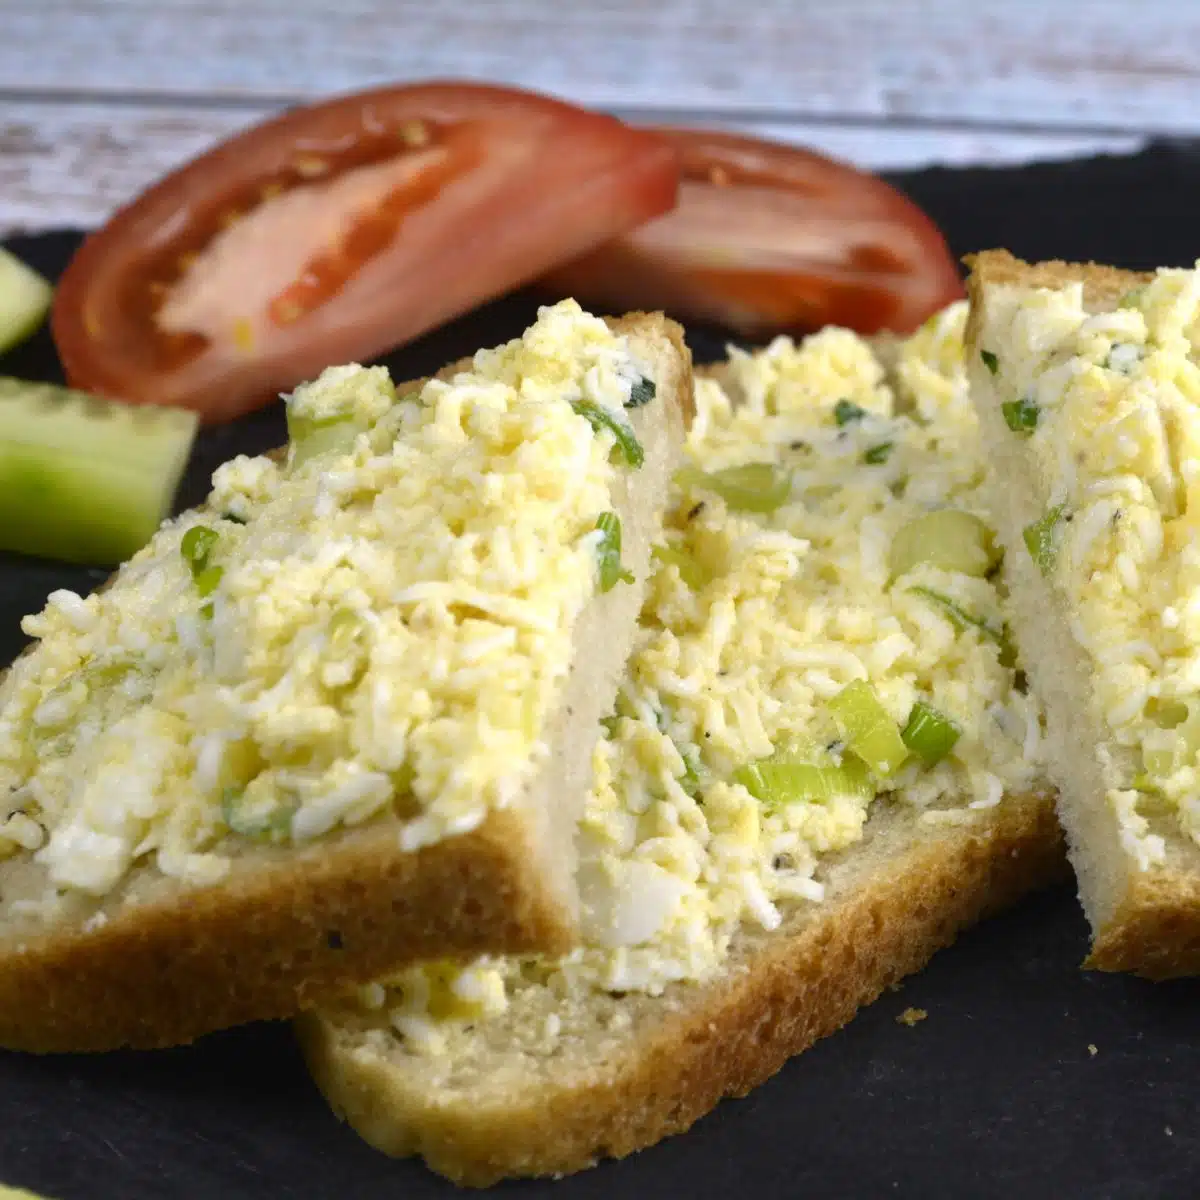 Classic Egg Salad Sandwich Recipe-Served on Bread